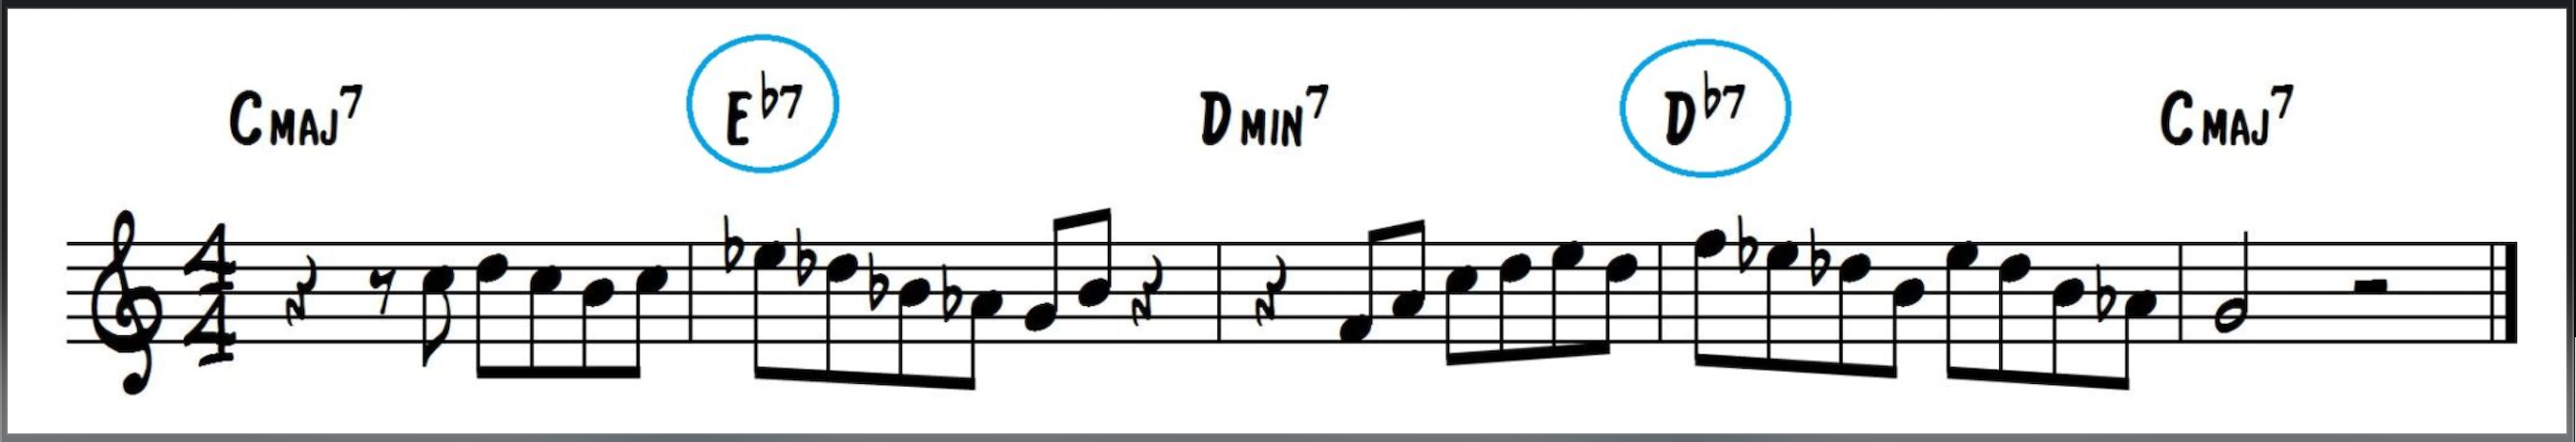 Ex 46: Tritone Substitution in a I-vi-ii-V chord progression in the key of C major